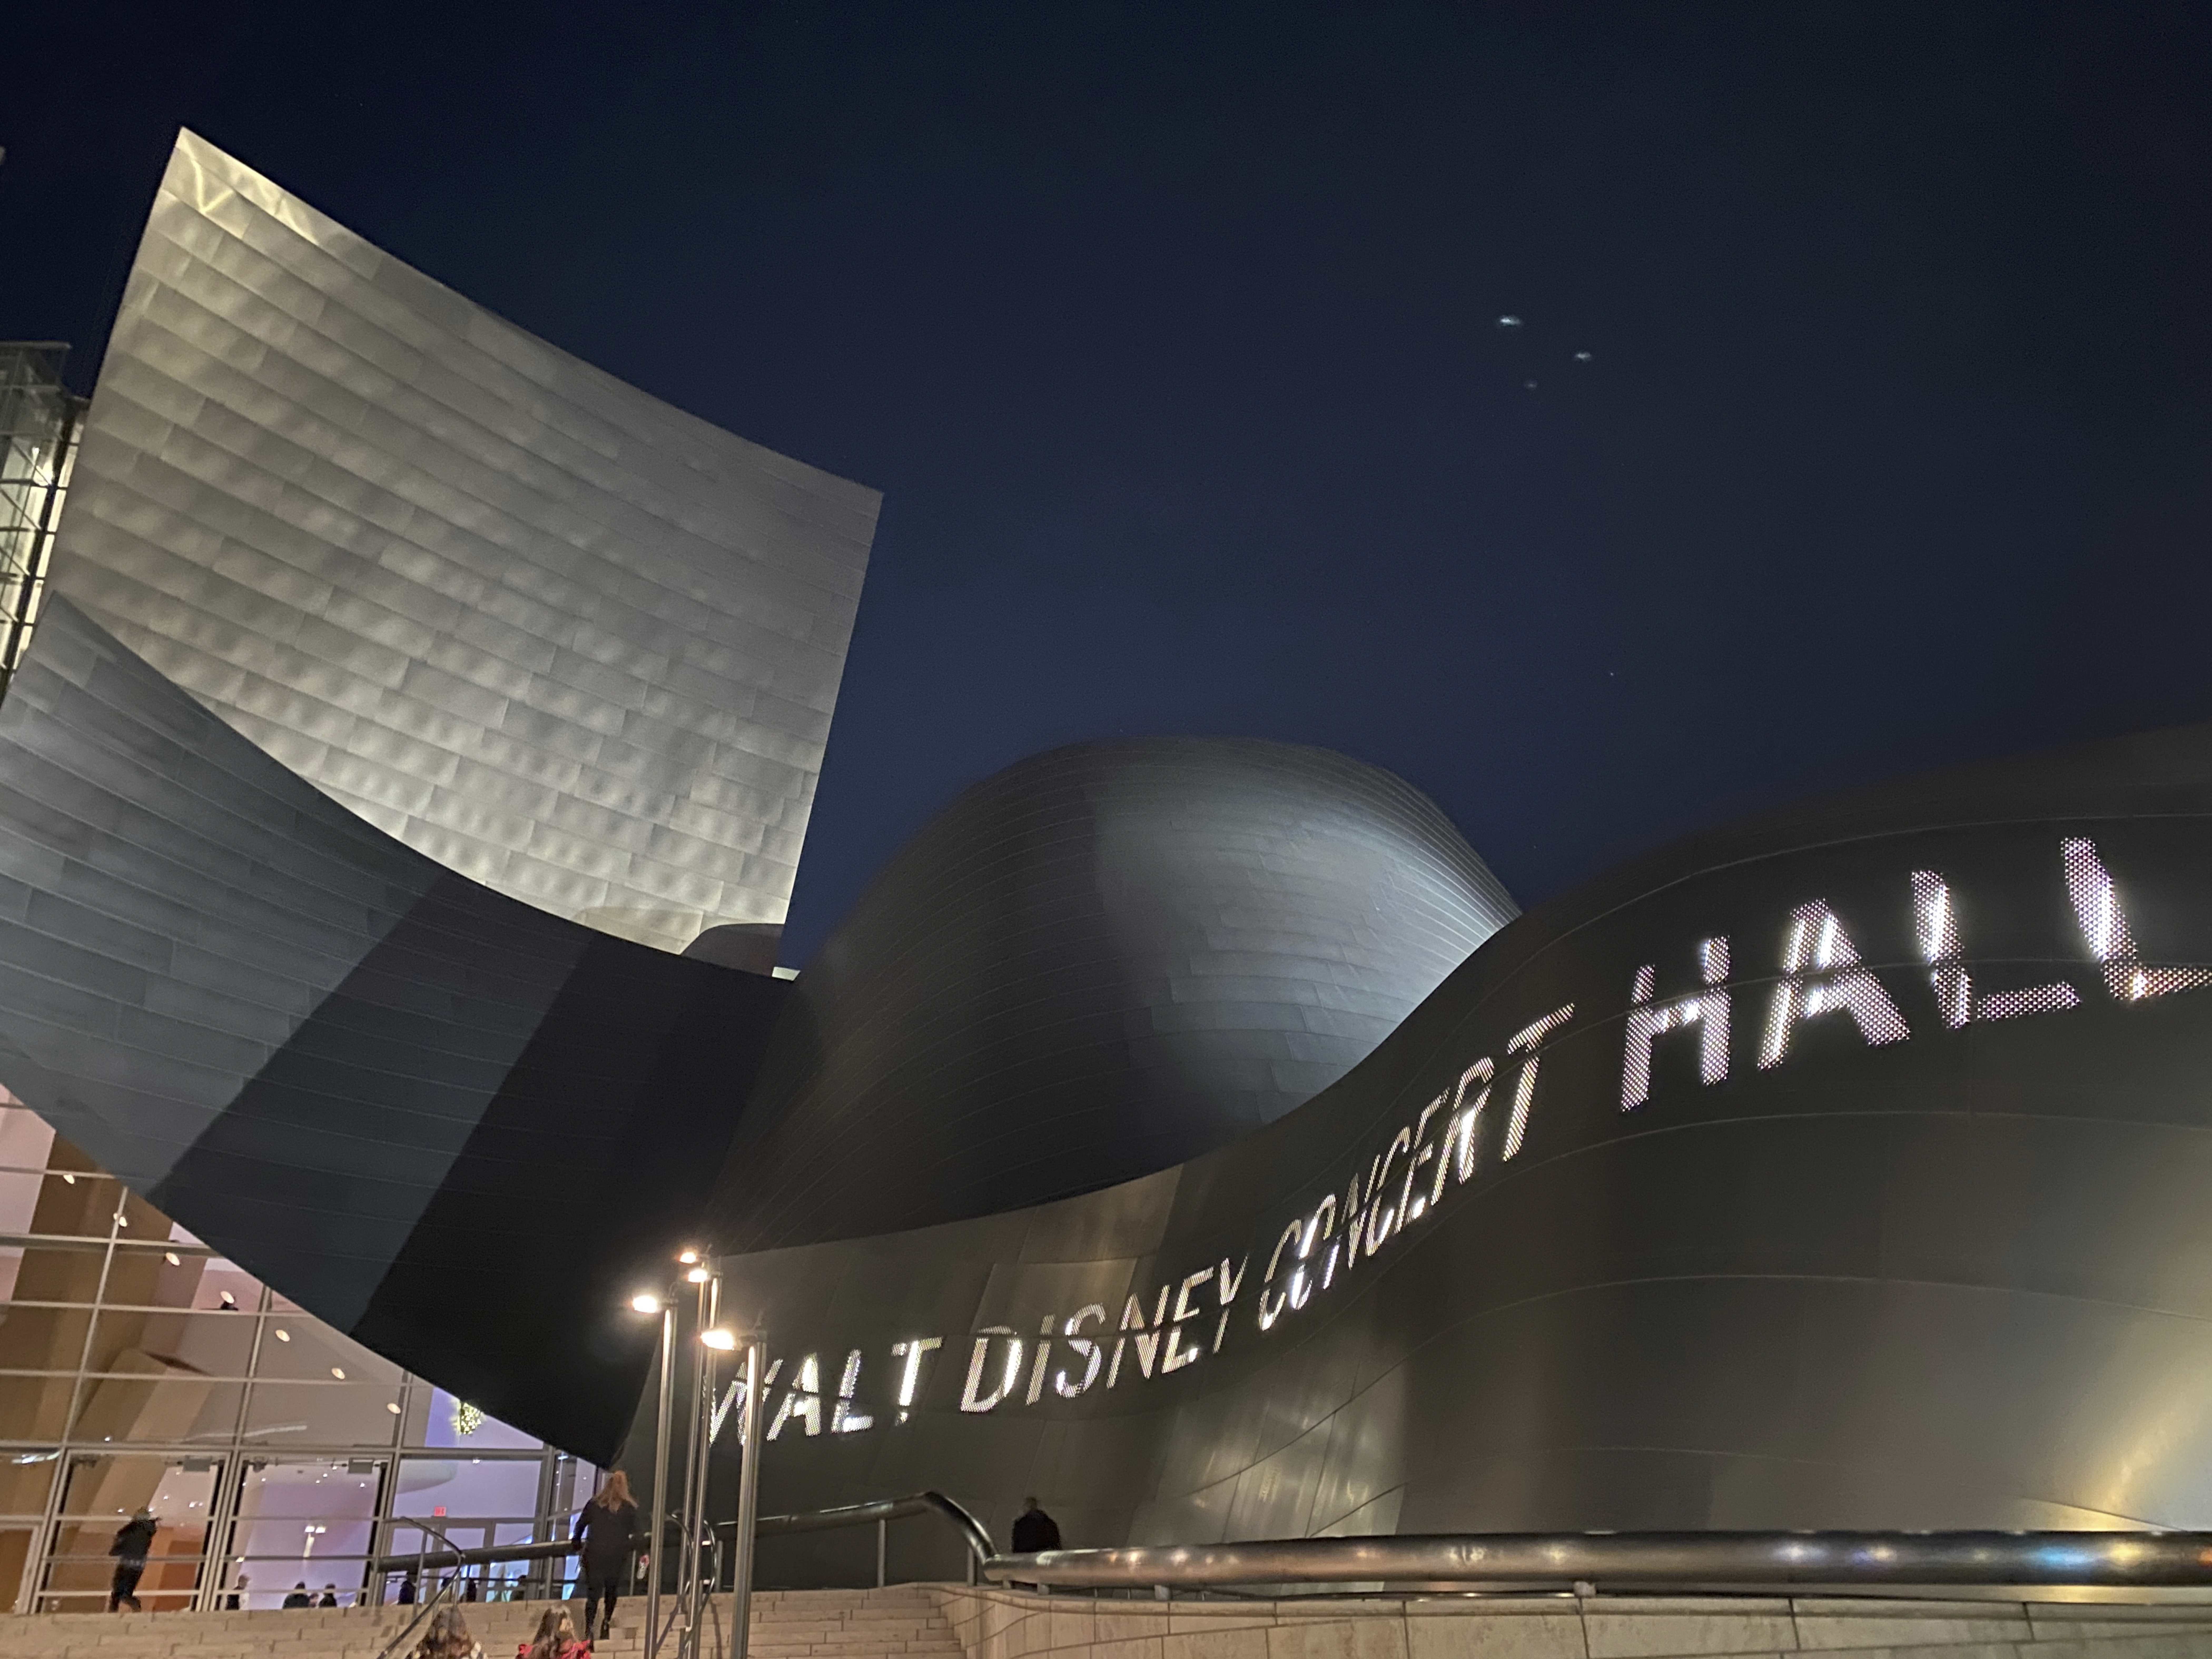 Walt-Disney-Concert-Hall-exterior-photo-by-PAA-.jpg